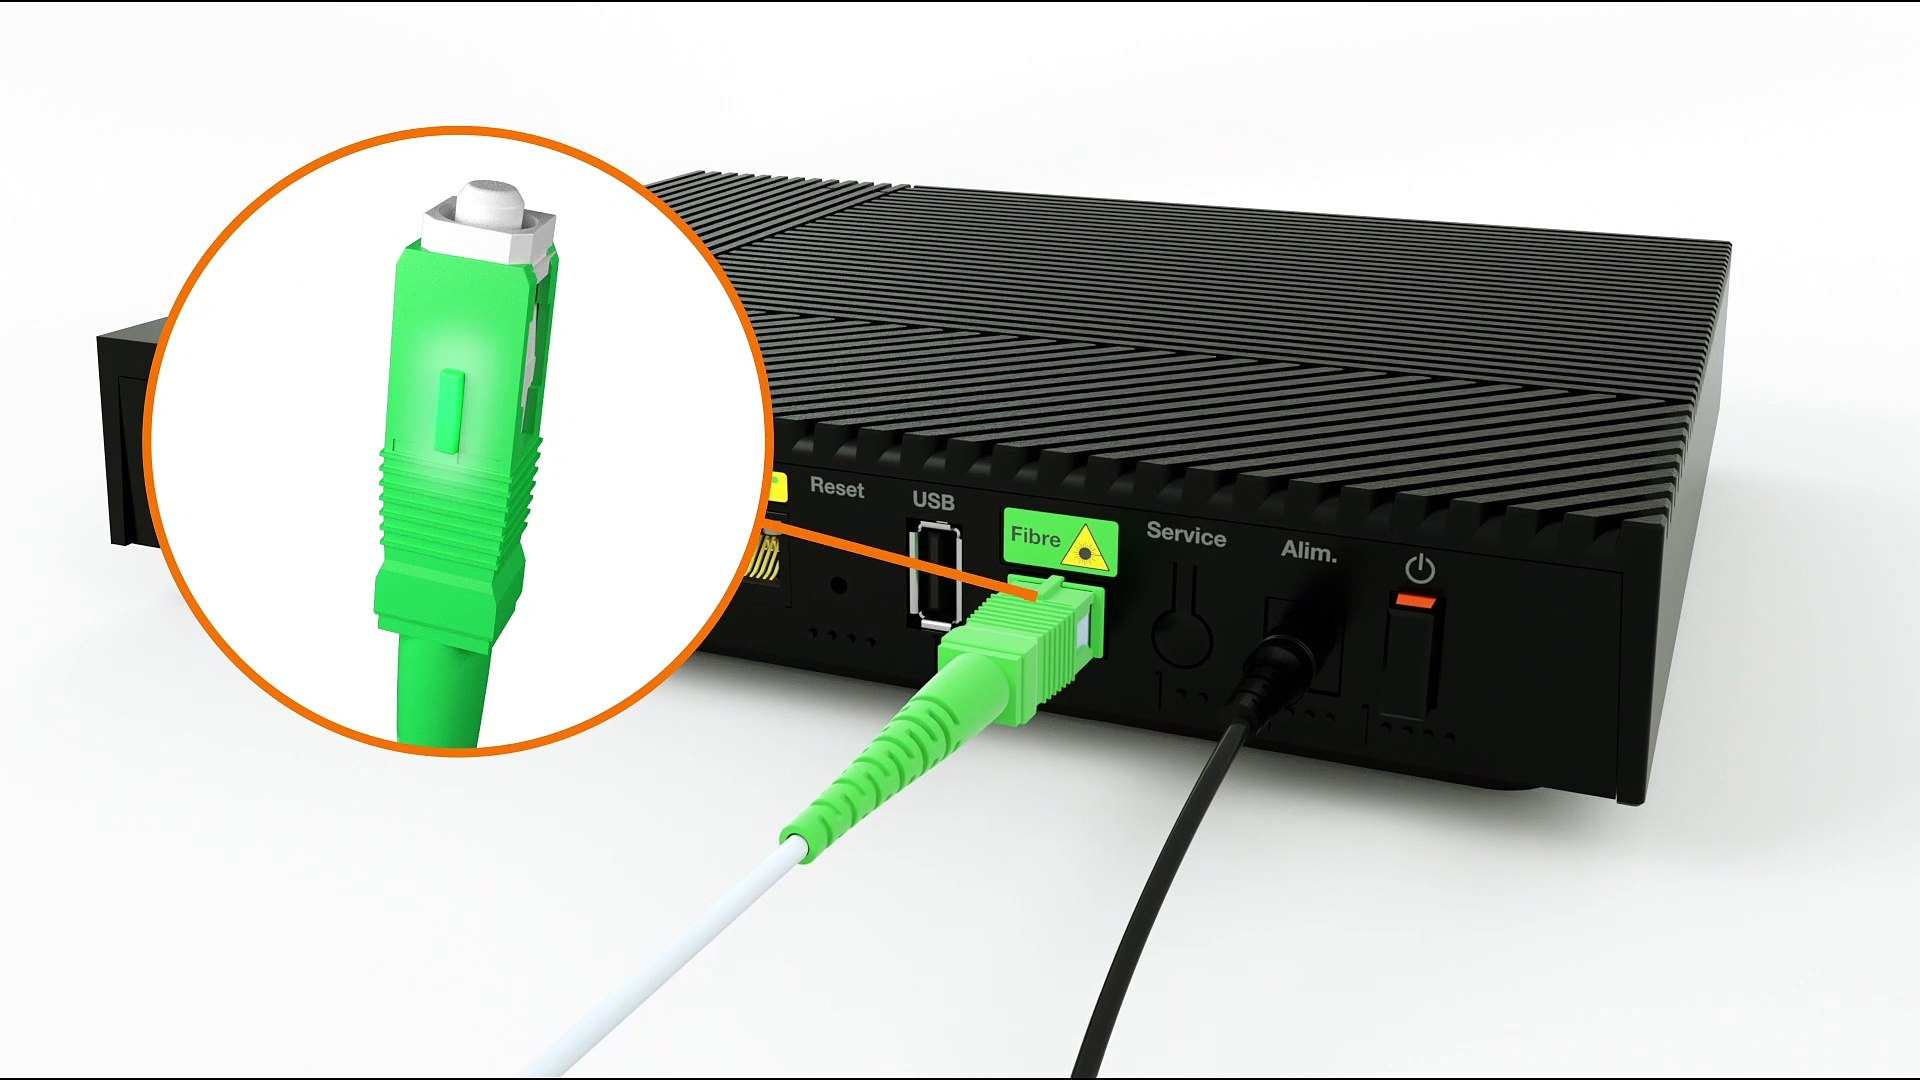 Connecter son imprimante USB sur sa box internet ! (boitier ADSL